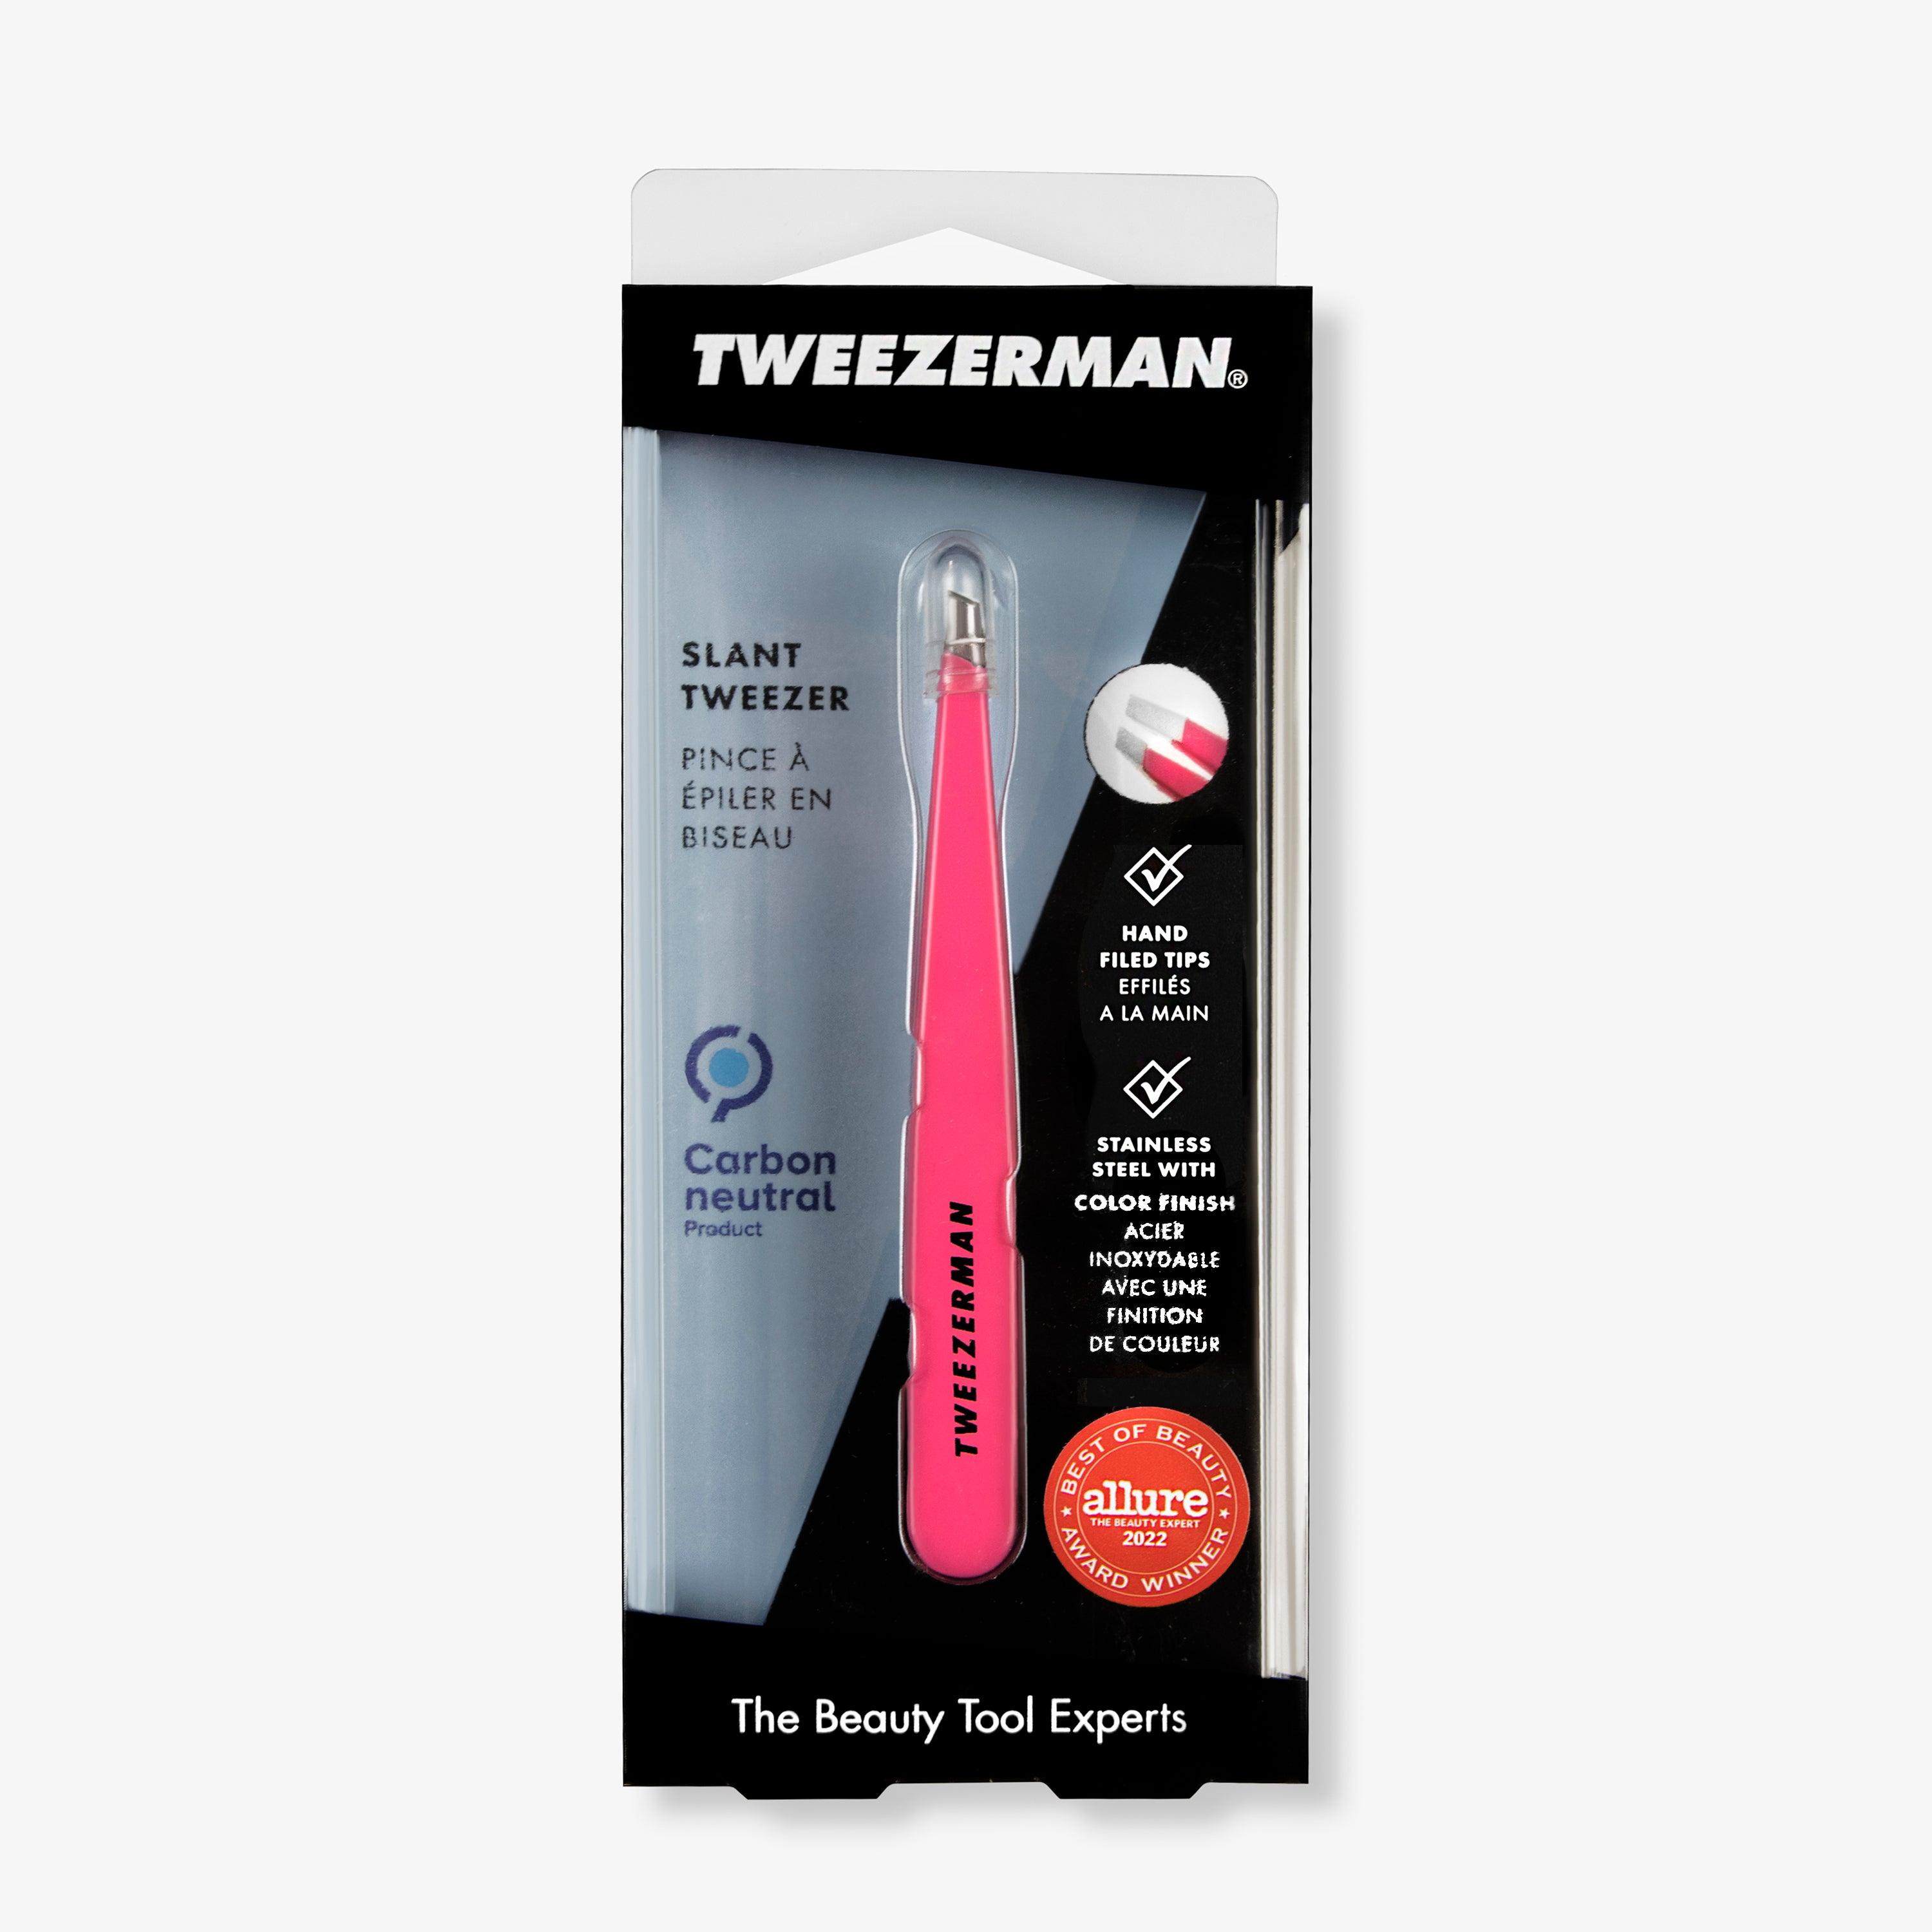 Tweezerman - Slant tweezer Pink - SerumGeeks